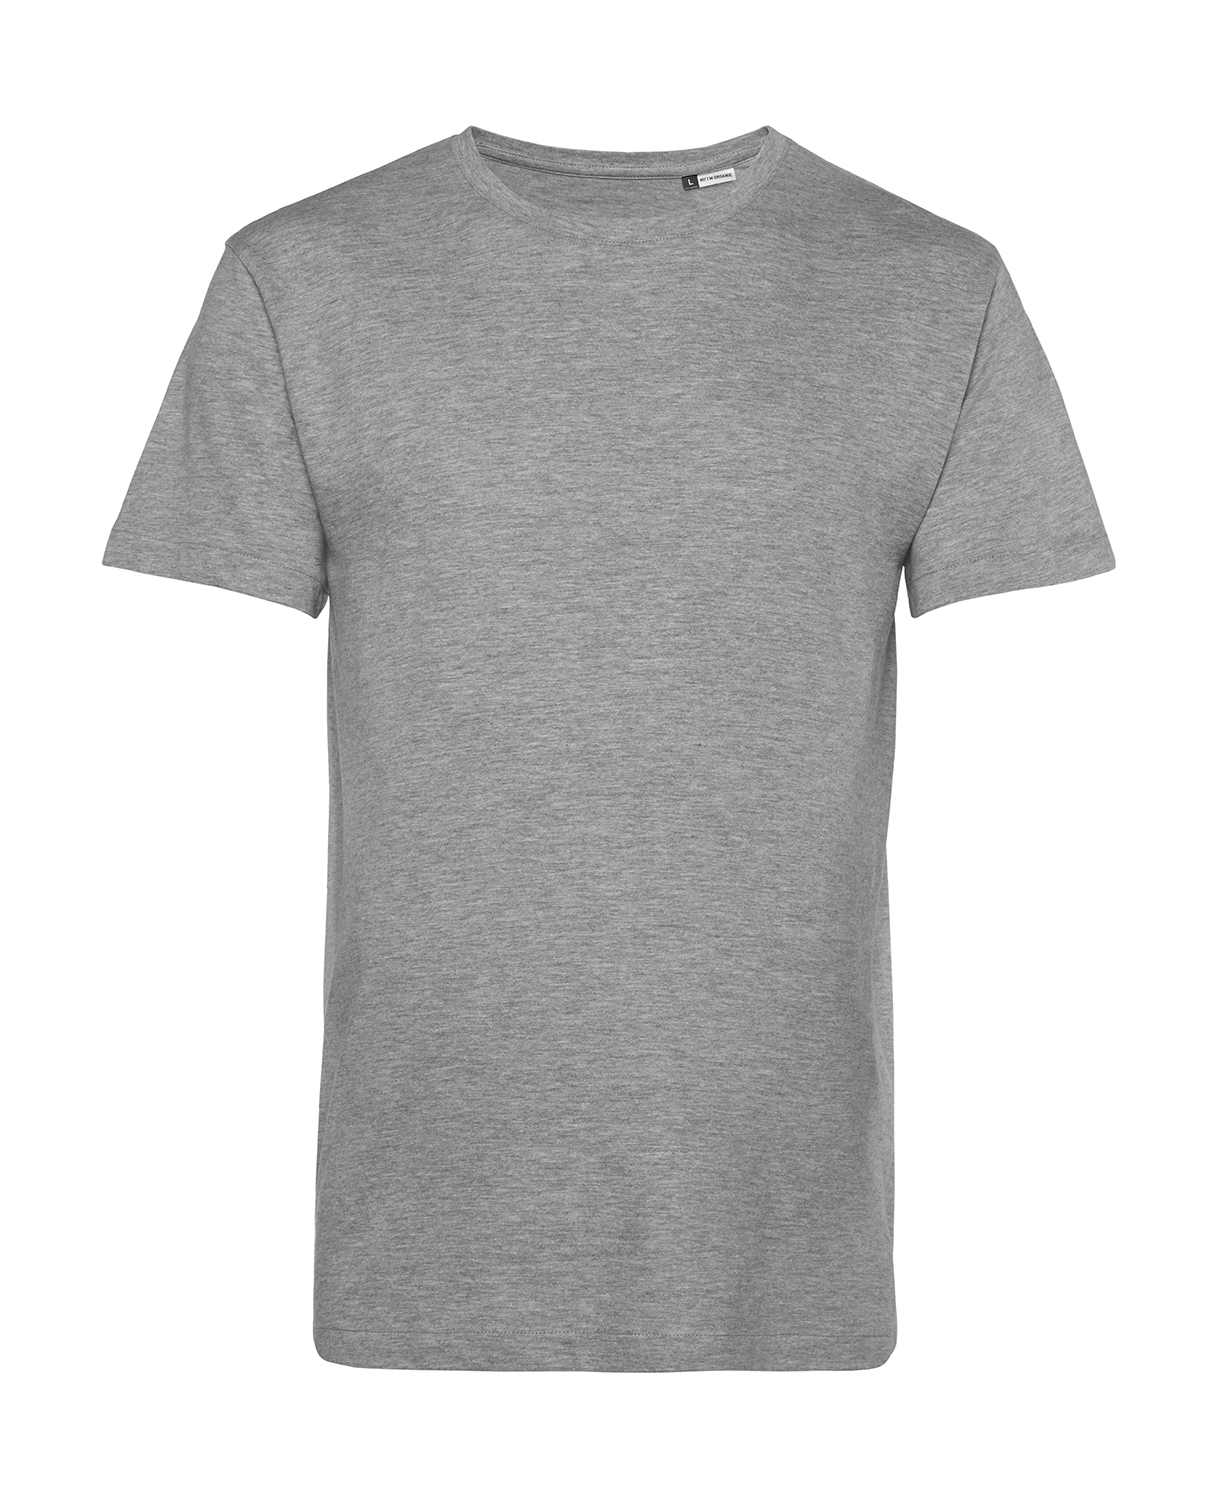 Nachhaltiges T-Shirt Herren 2Takter - Lieber Rost statt Plastik MZ